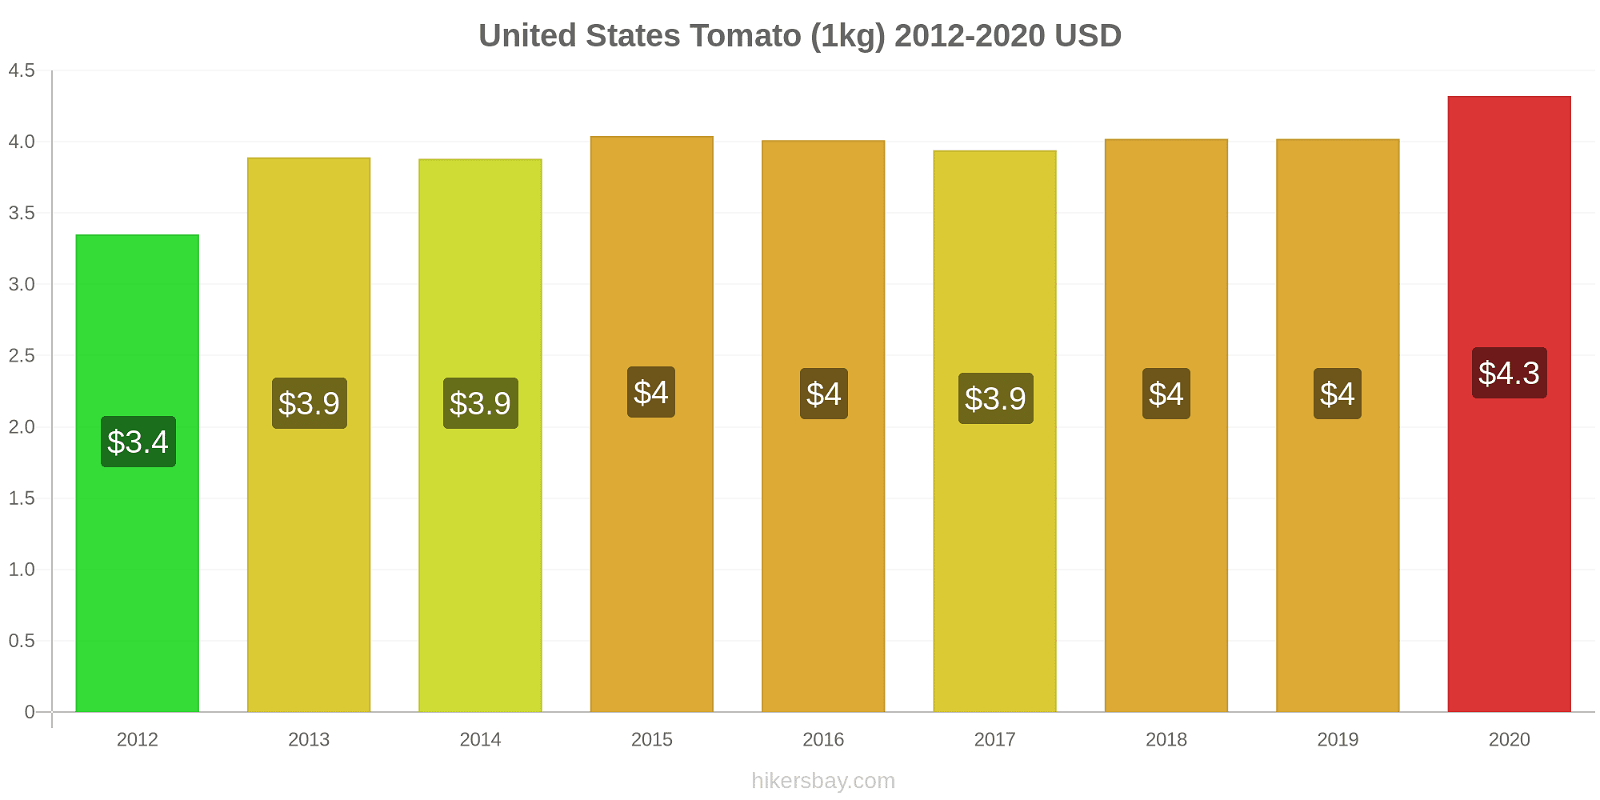 United States price changes Tomato (1kg) hikersbay.com